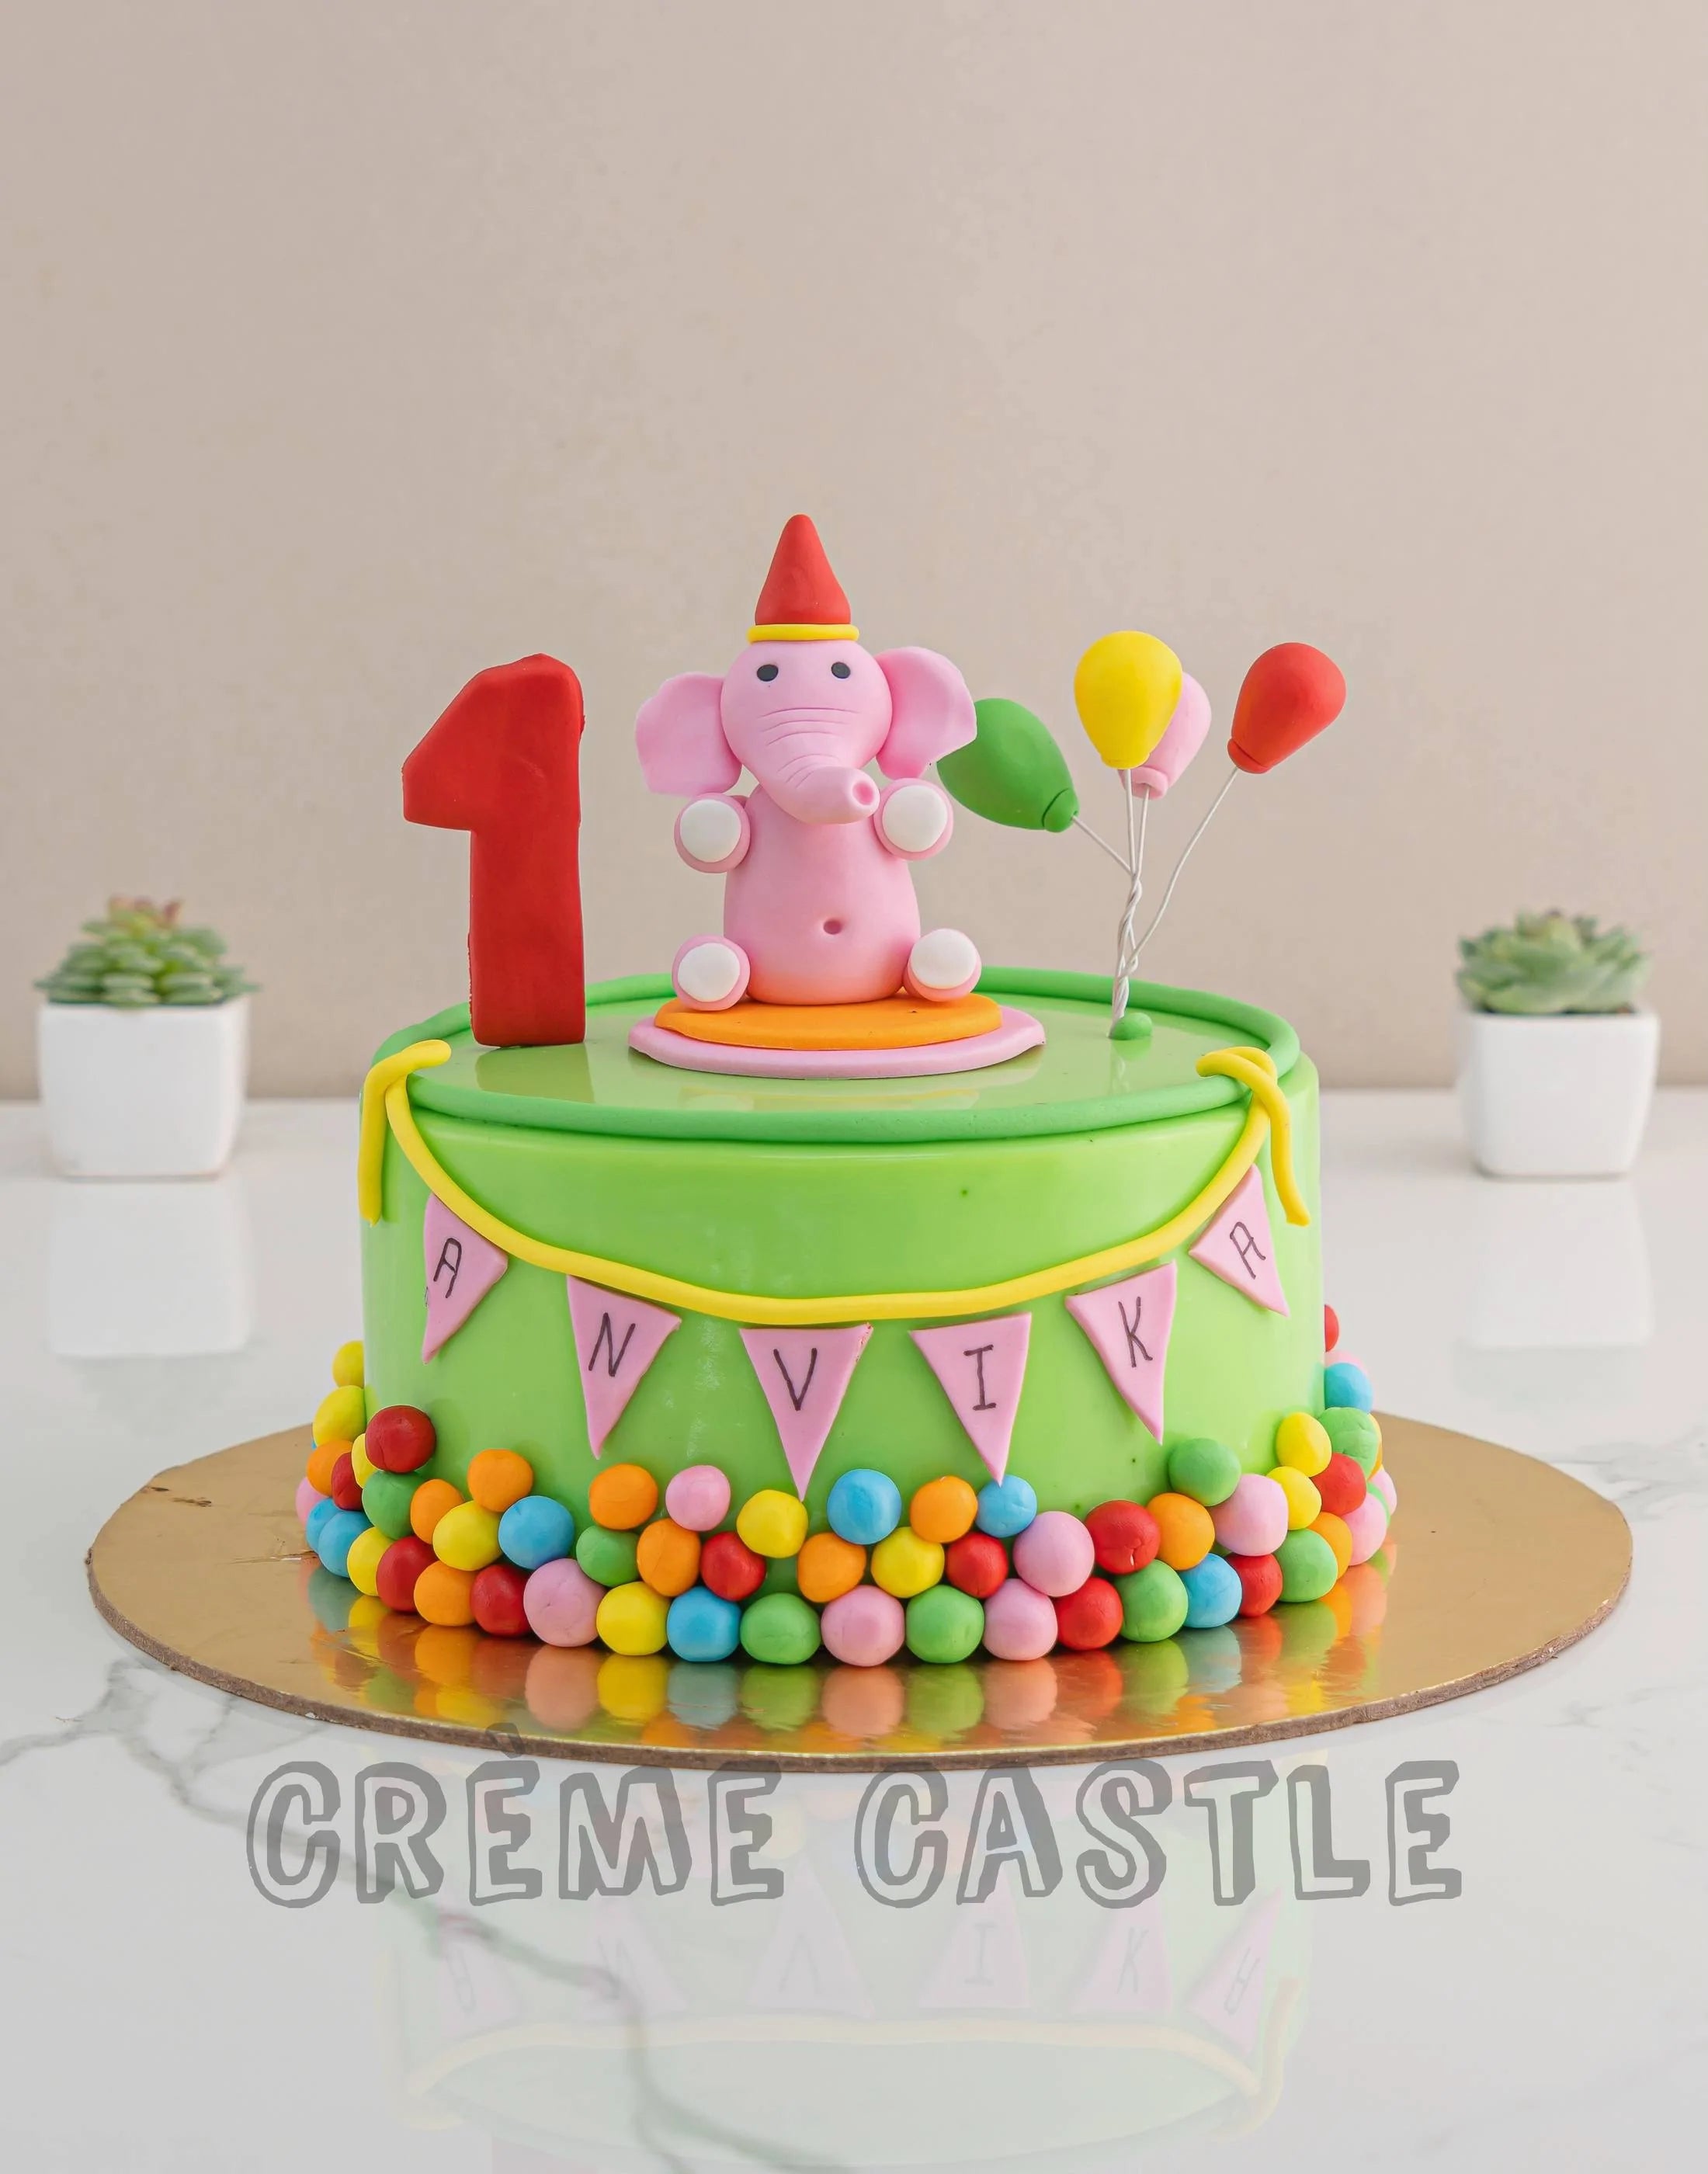 Cake boutique - Cute elephant 1st birthday cake!! #cake_boutique_corfu  #fondantcake #fondant #elephant #balloons #firstbirthdaycake #birthday # birthdaycake #cake #cakeporn #instacake #cakestagram #cakeart #cakeartist  #artistcake #corfu #greece | Facebook